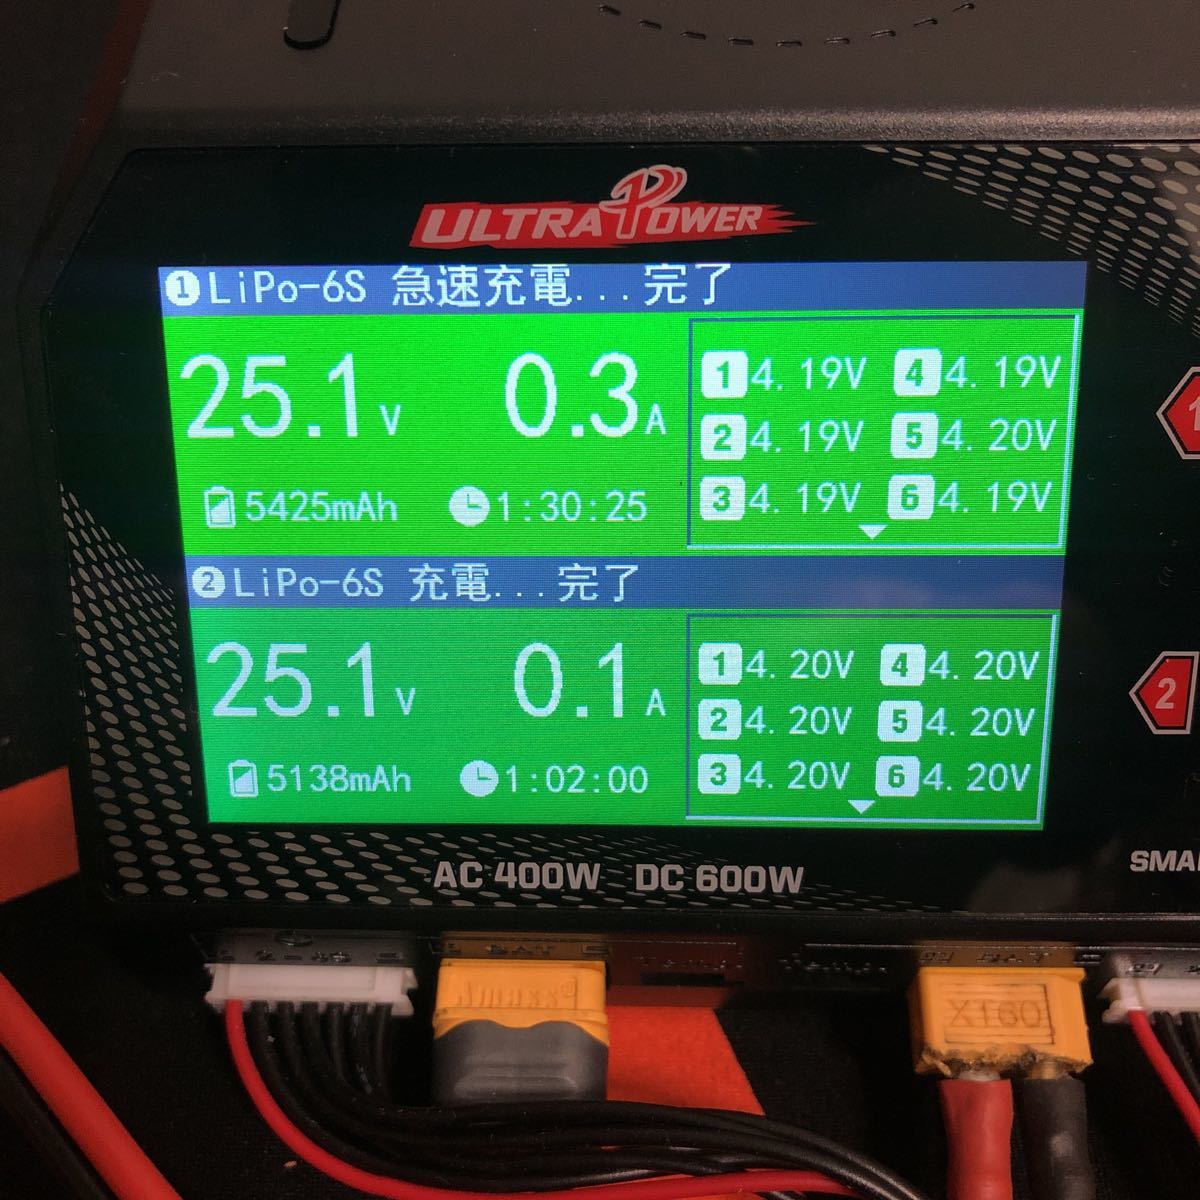 ULTRA POWER UP8 AC400W/DC600W コンパクト2ポート急速充電器 日本語表記に変更済 新品